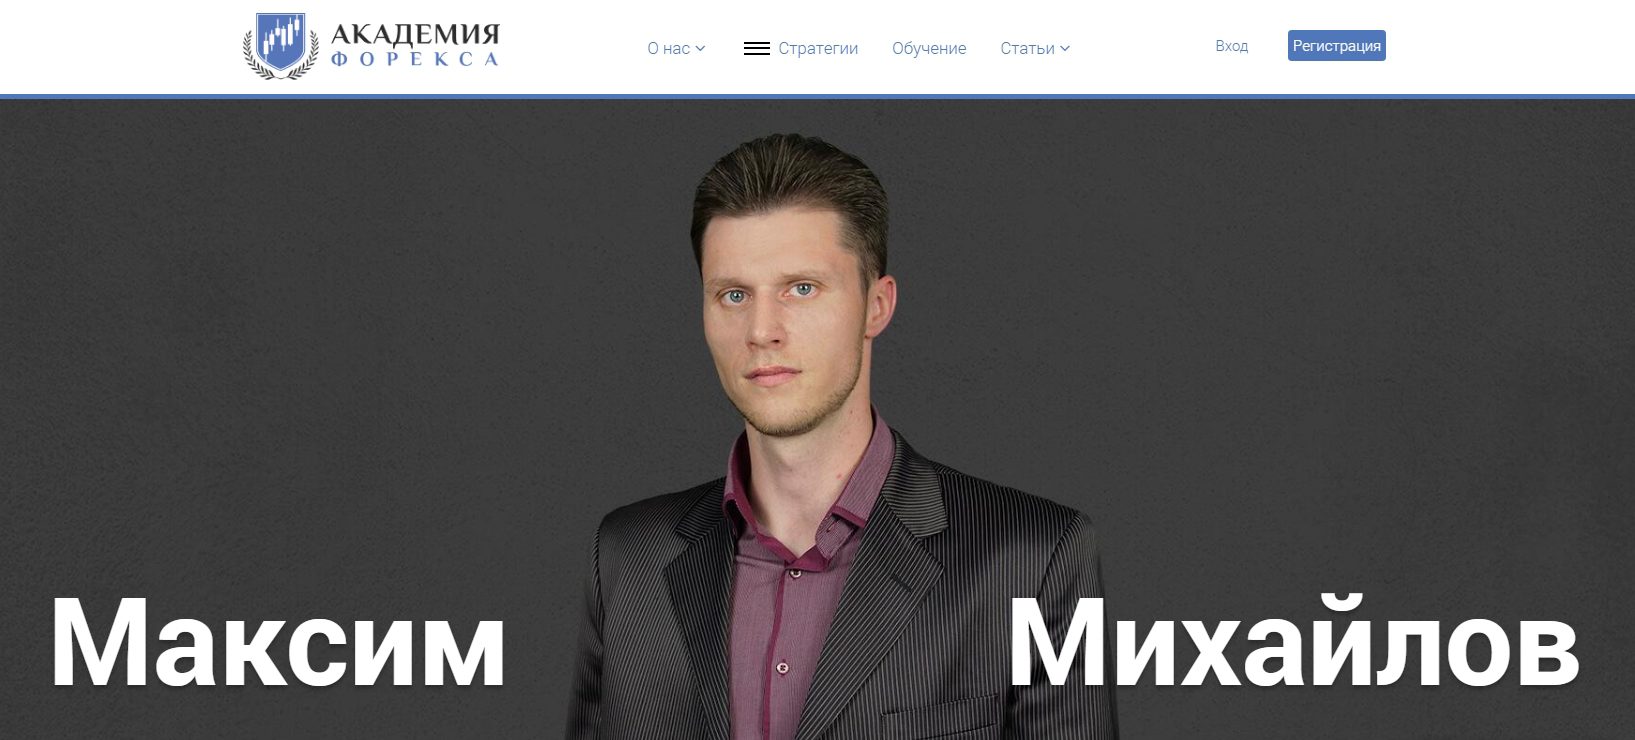 Сайт Максима Михайлова